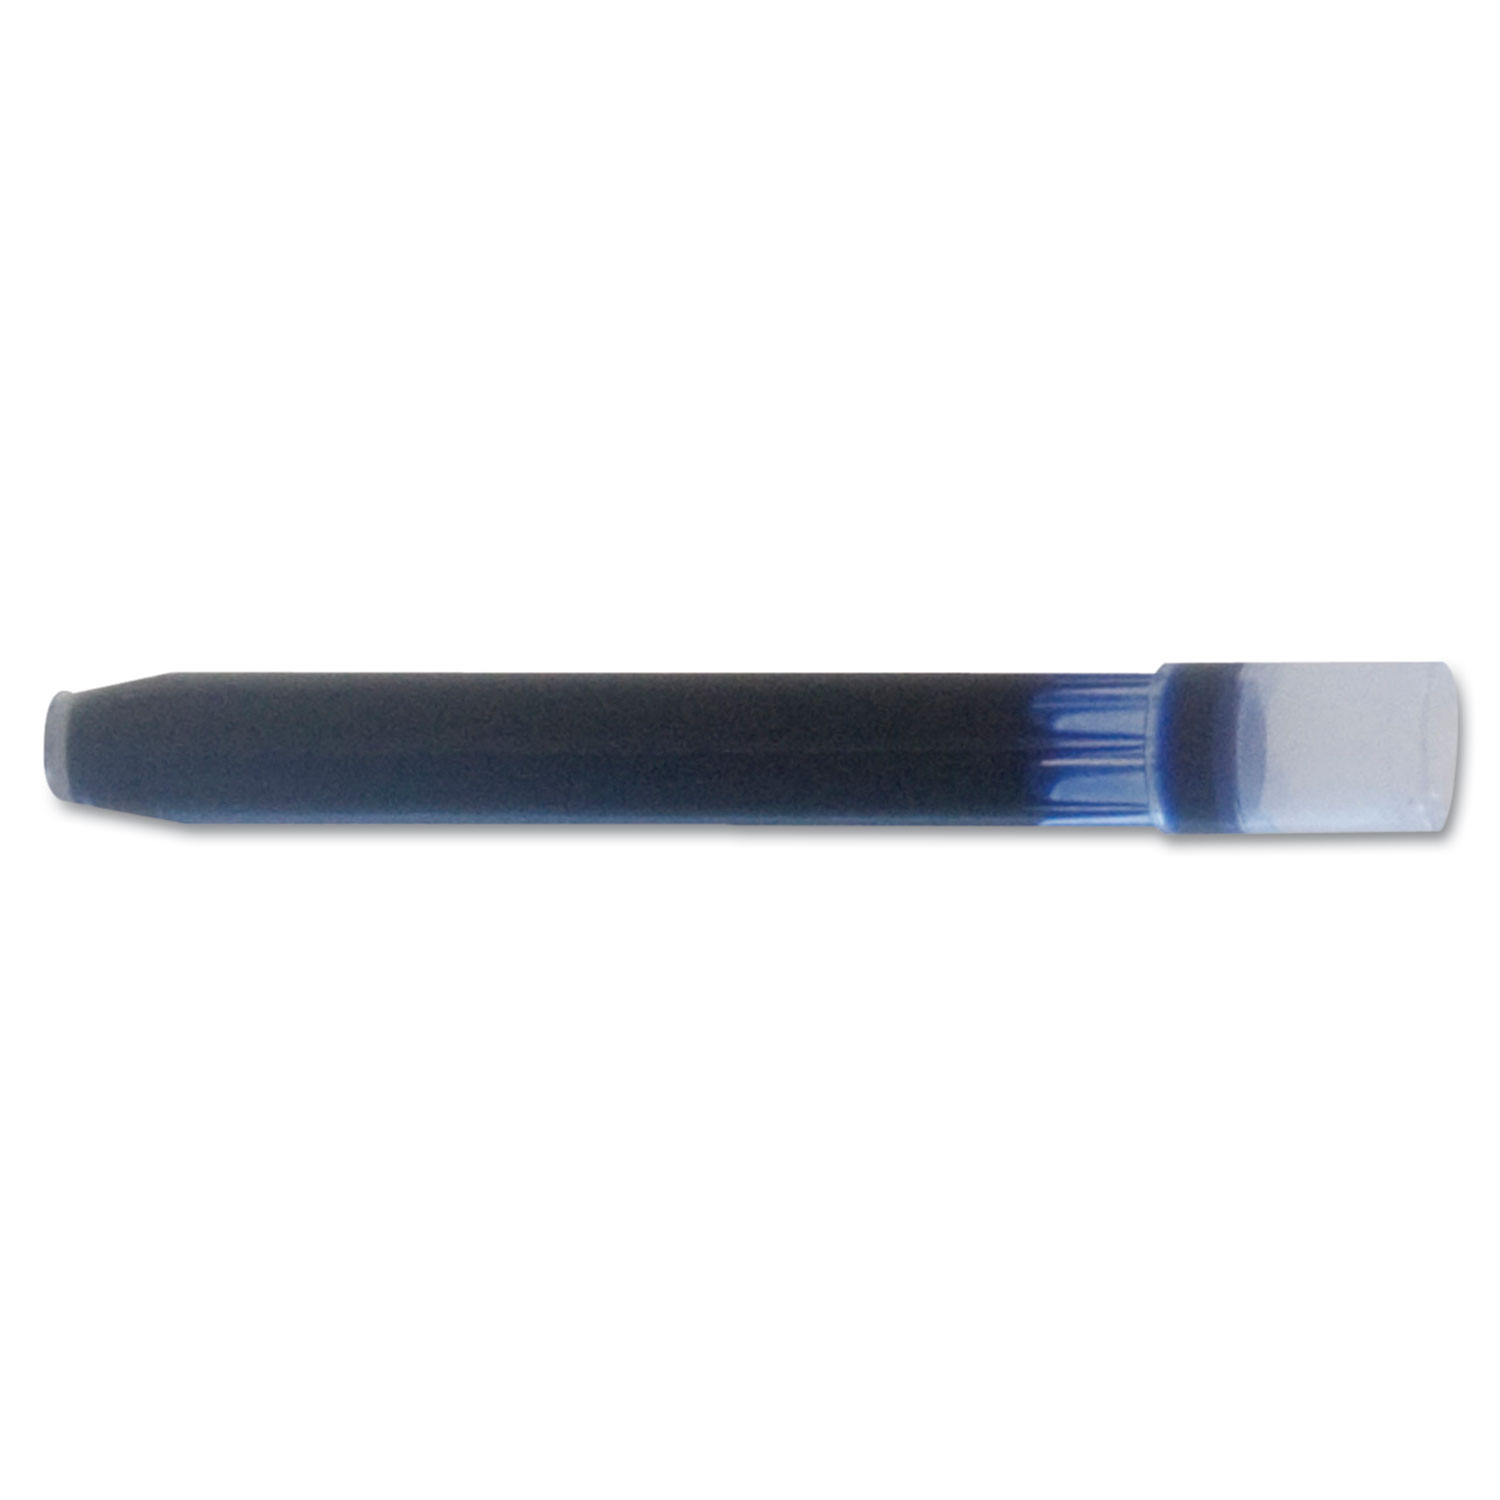  Pilot 69100 Plumix Fountain Pen Refill Cartridge, Permanent Black Ink, 12/Box (PIL69100) 